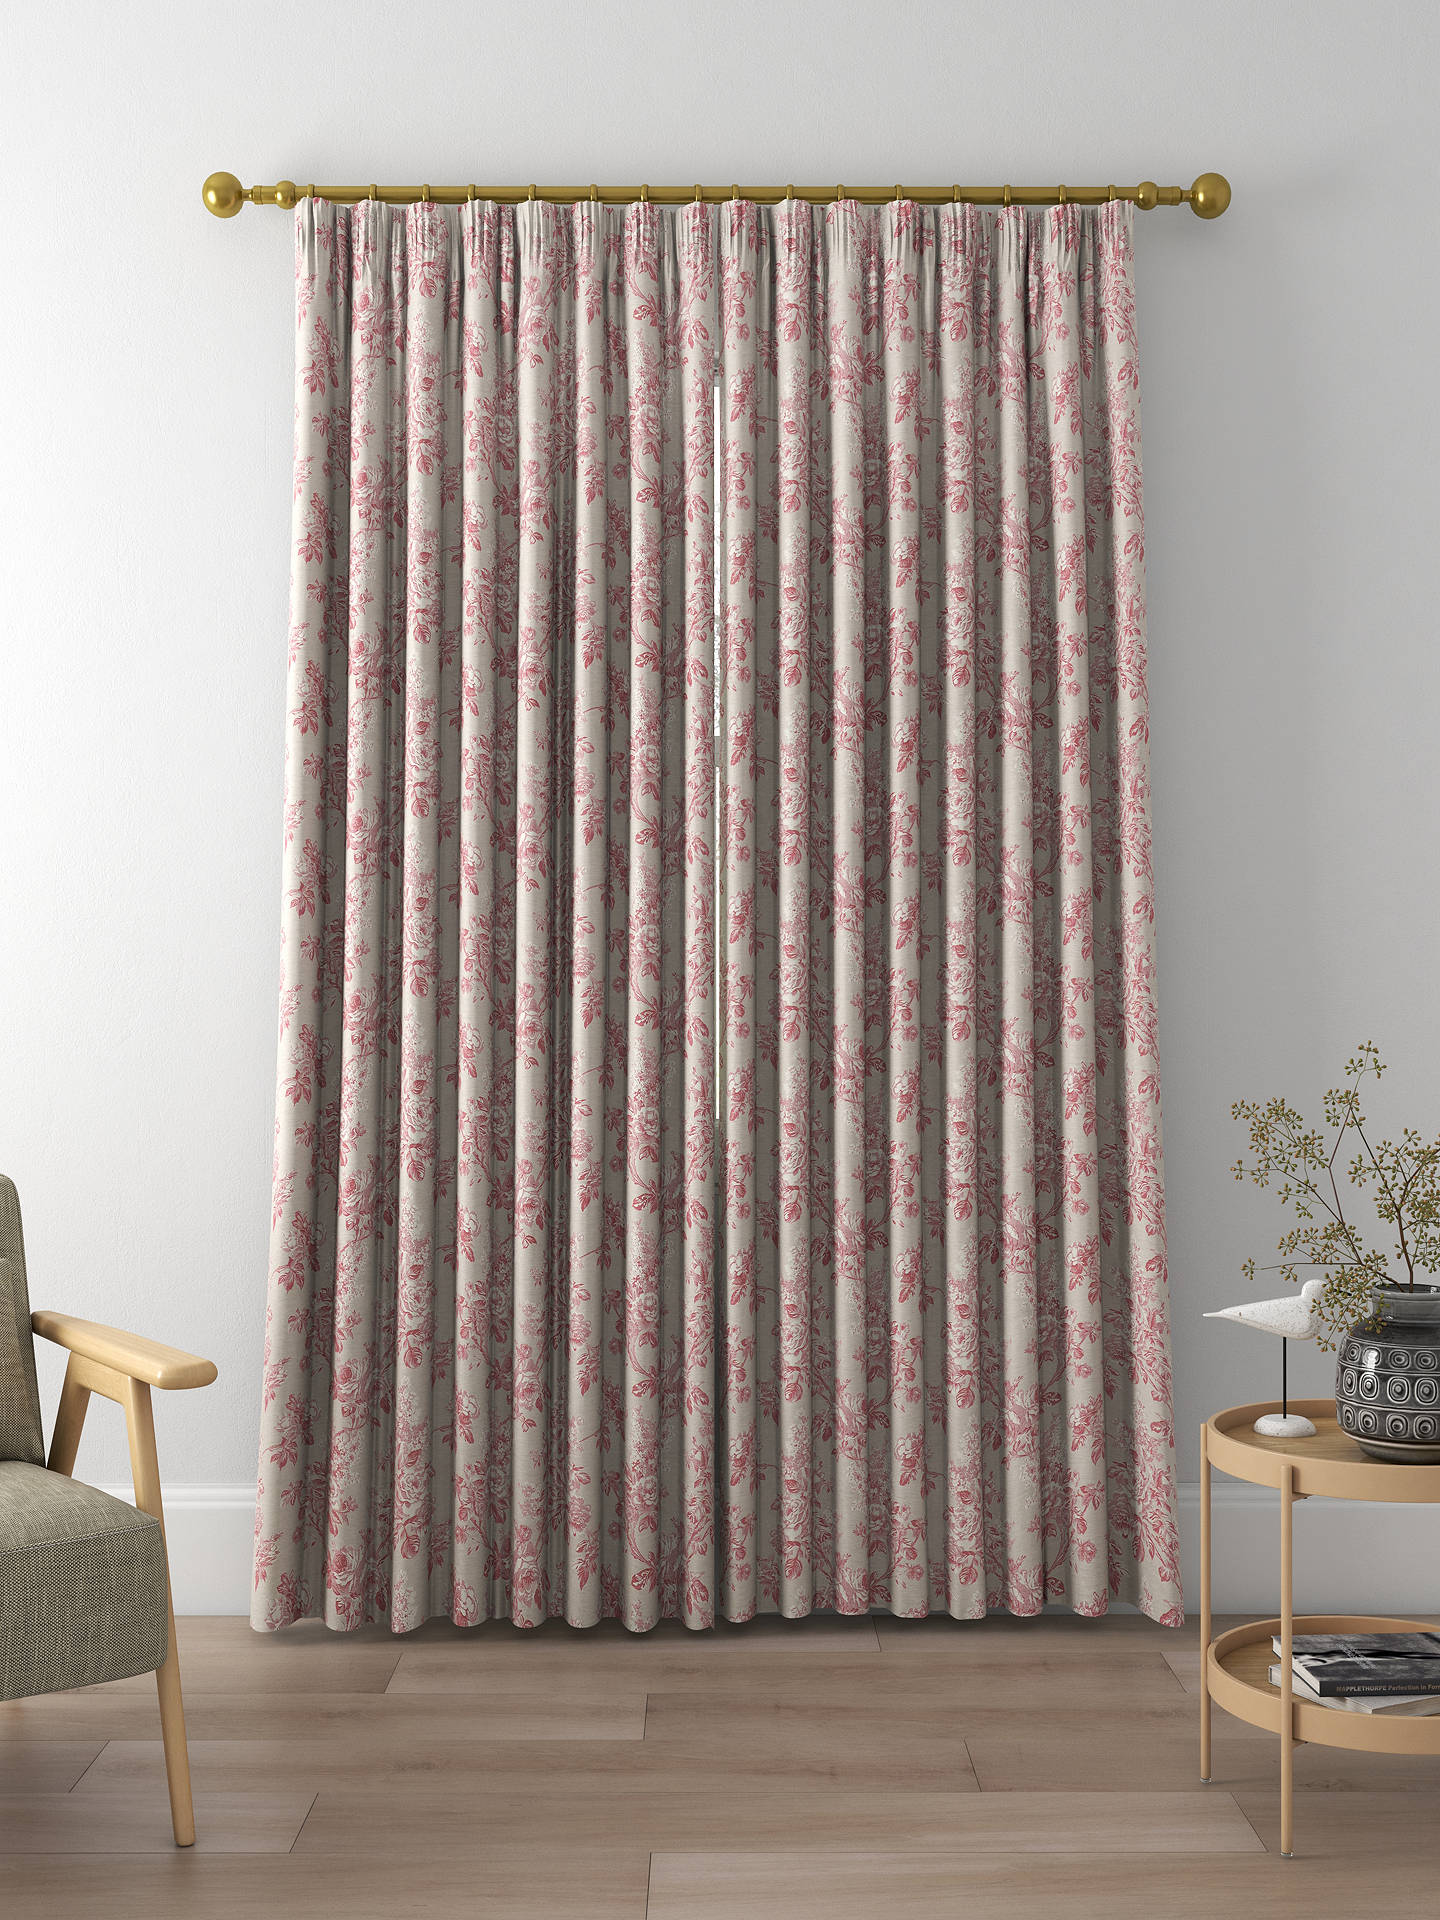 Sanderson Sorilla Damask Made to Measure Curtains, Rose/Linen